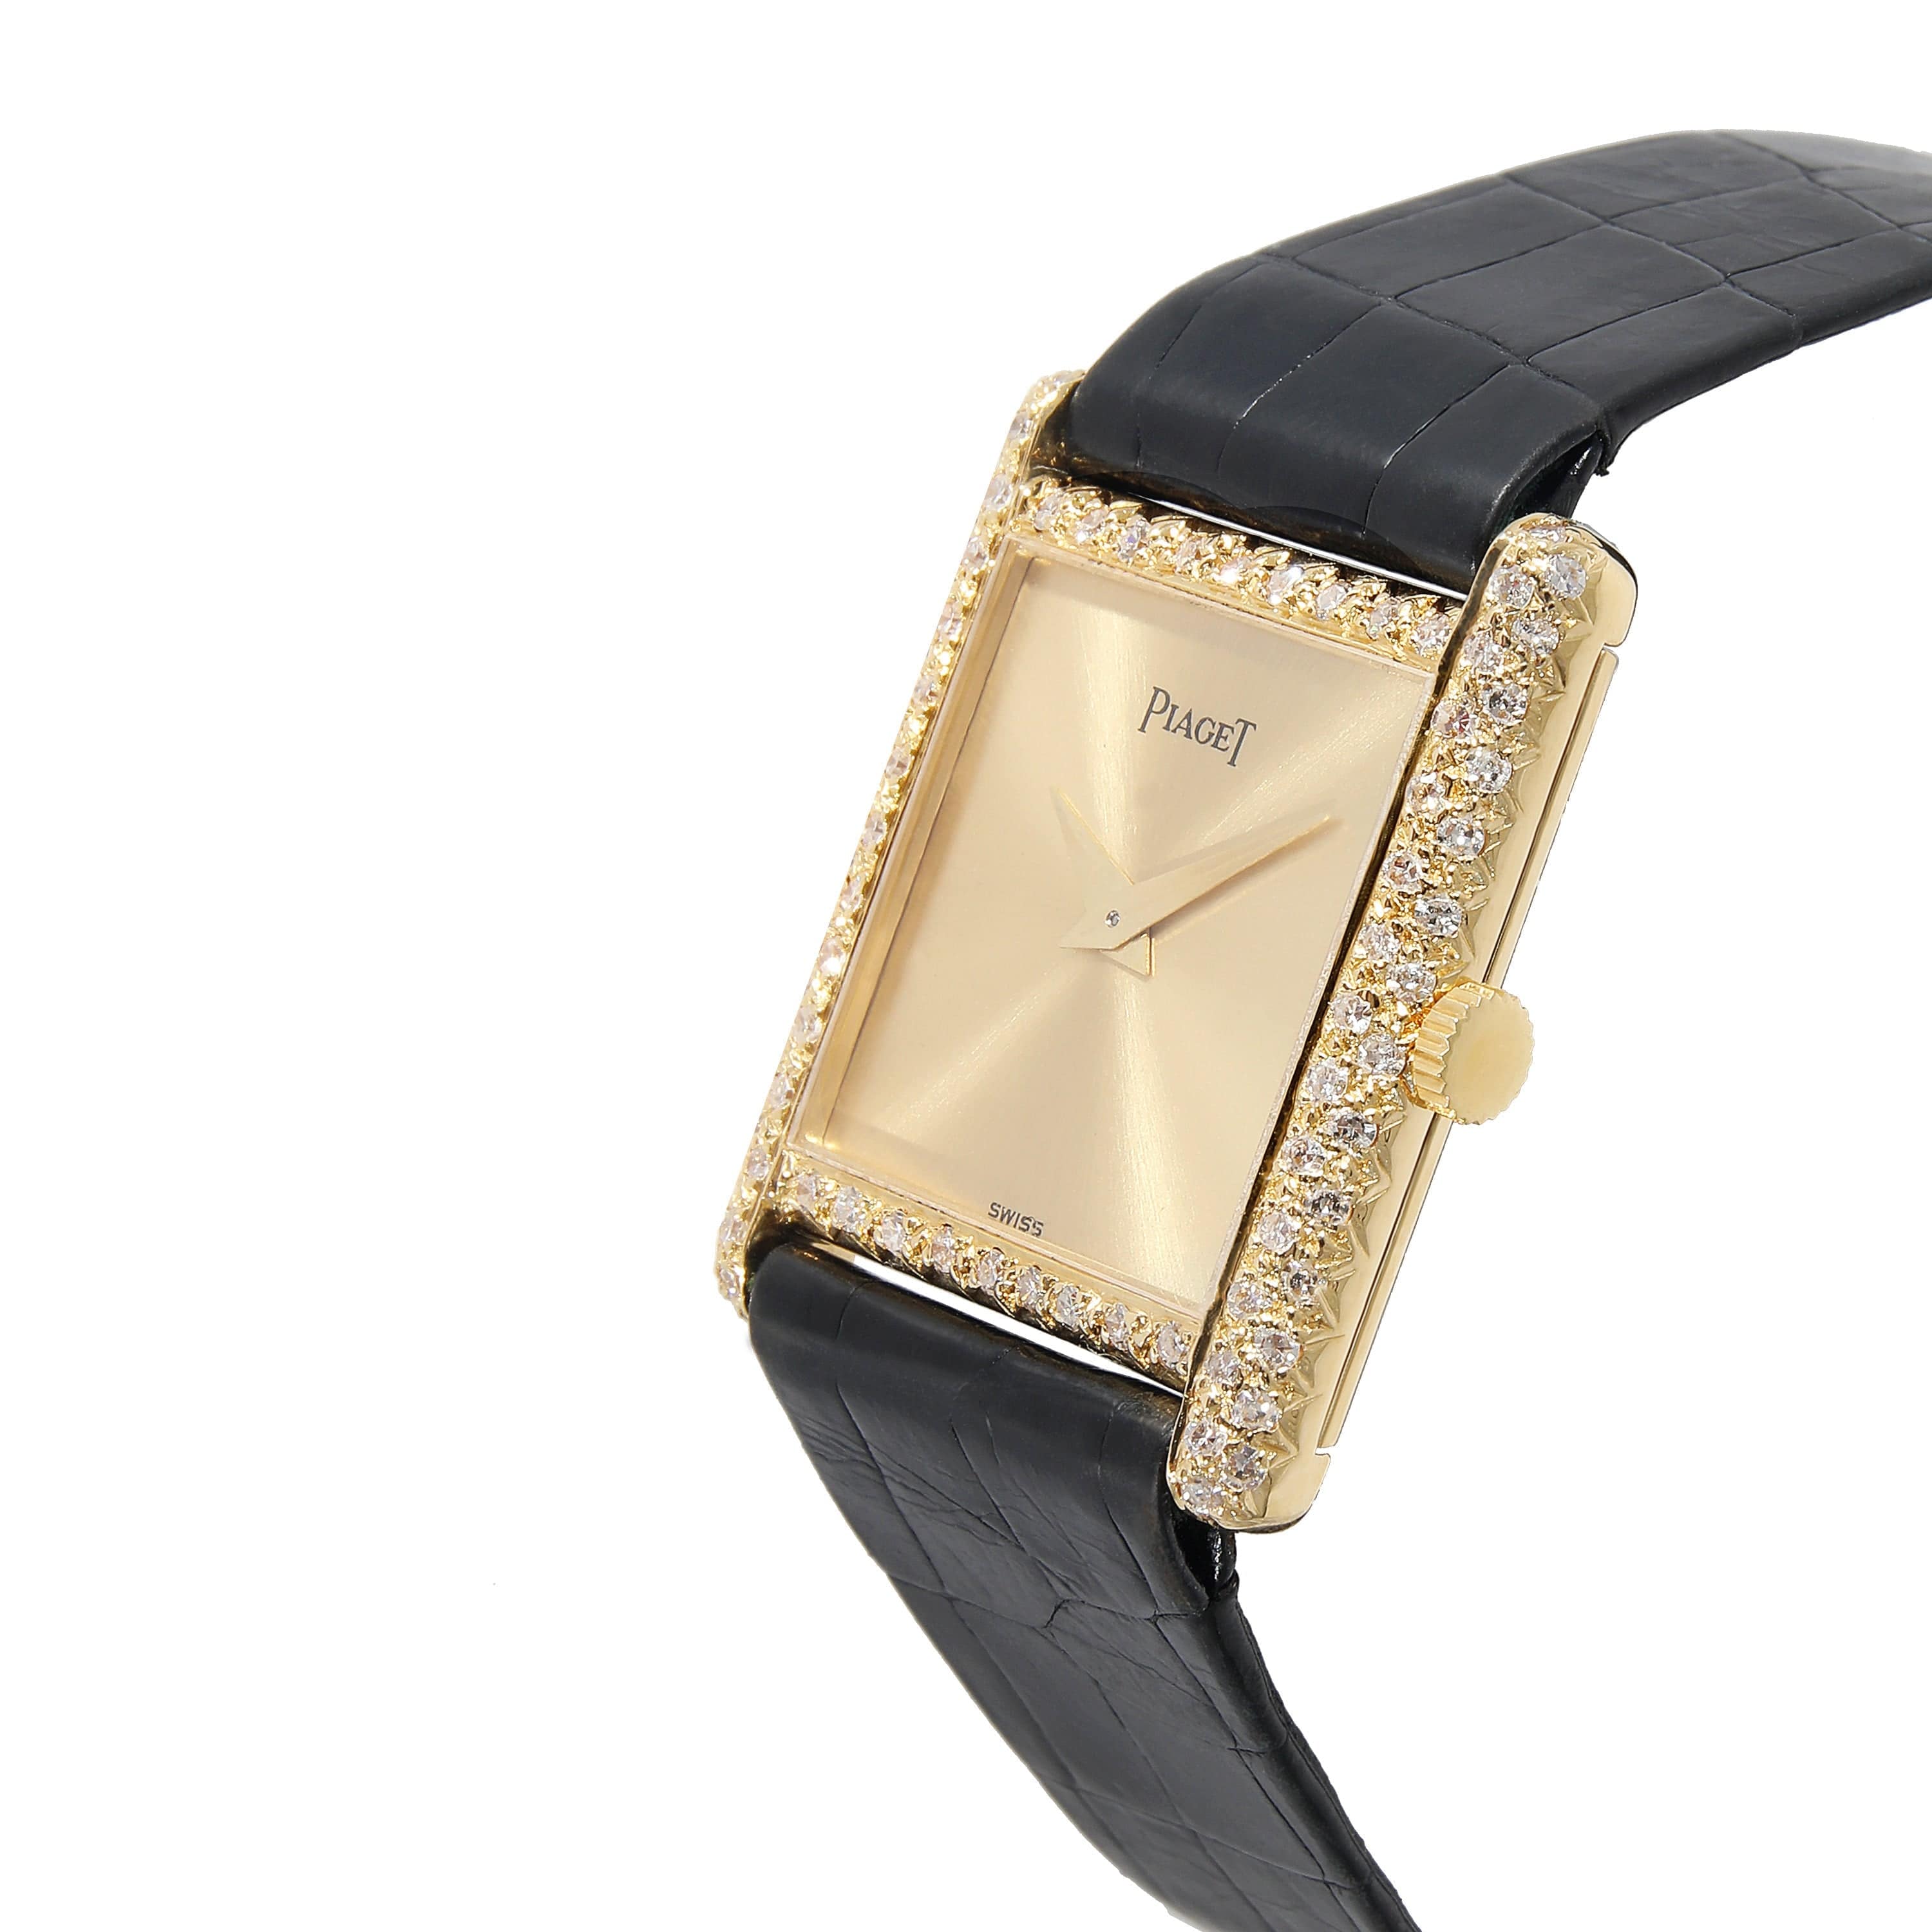 Piaget Piaget Classique 40825 Women's Watch in 18kt Yellow Gold